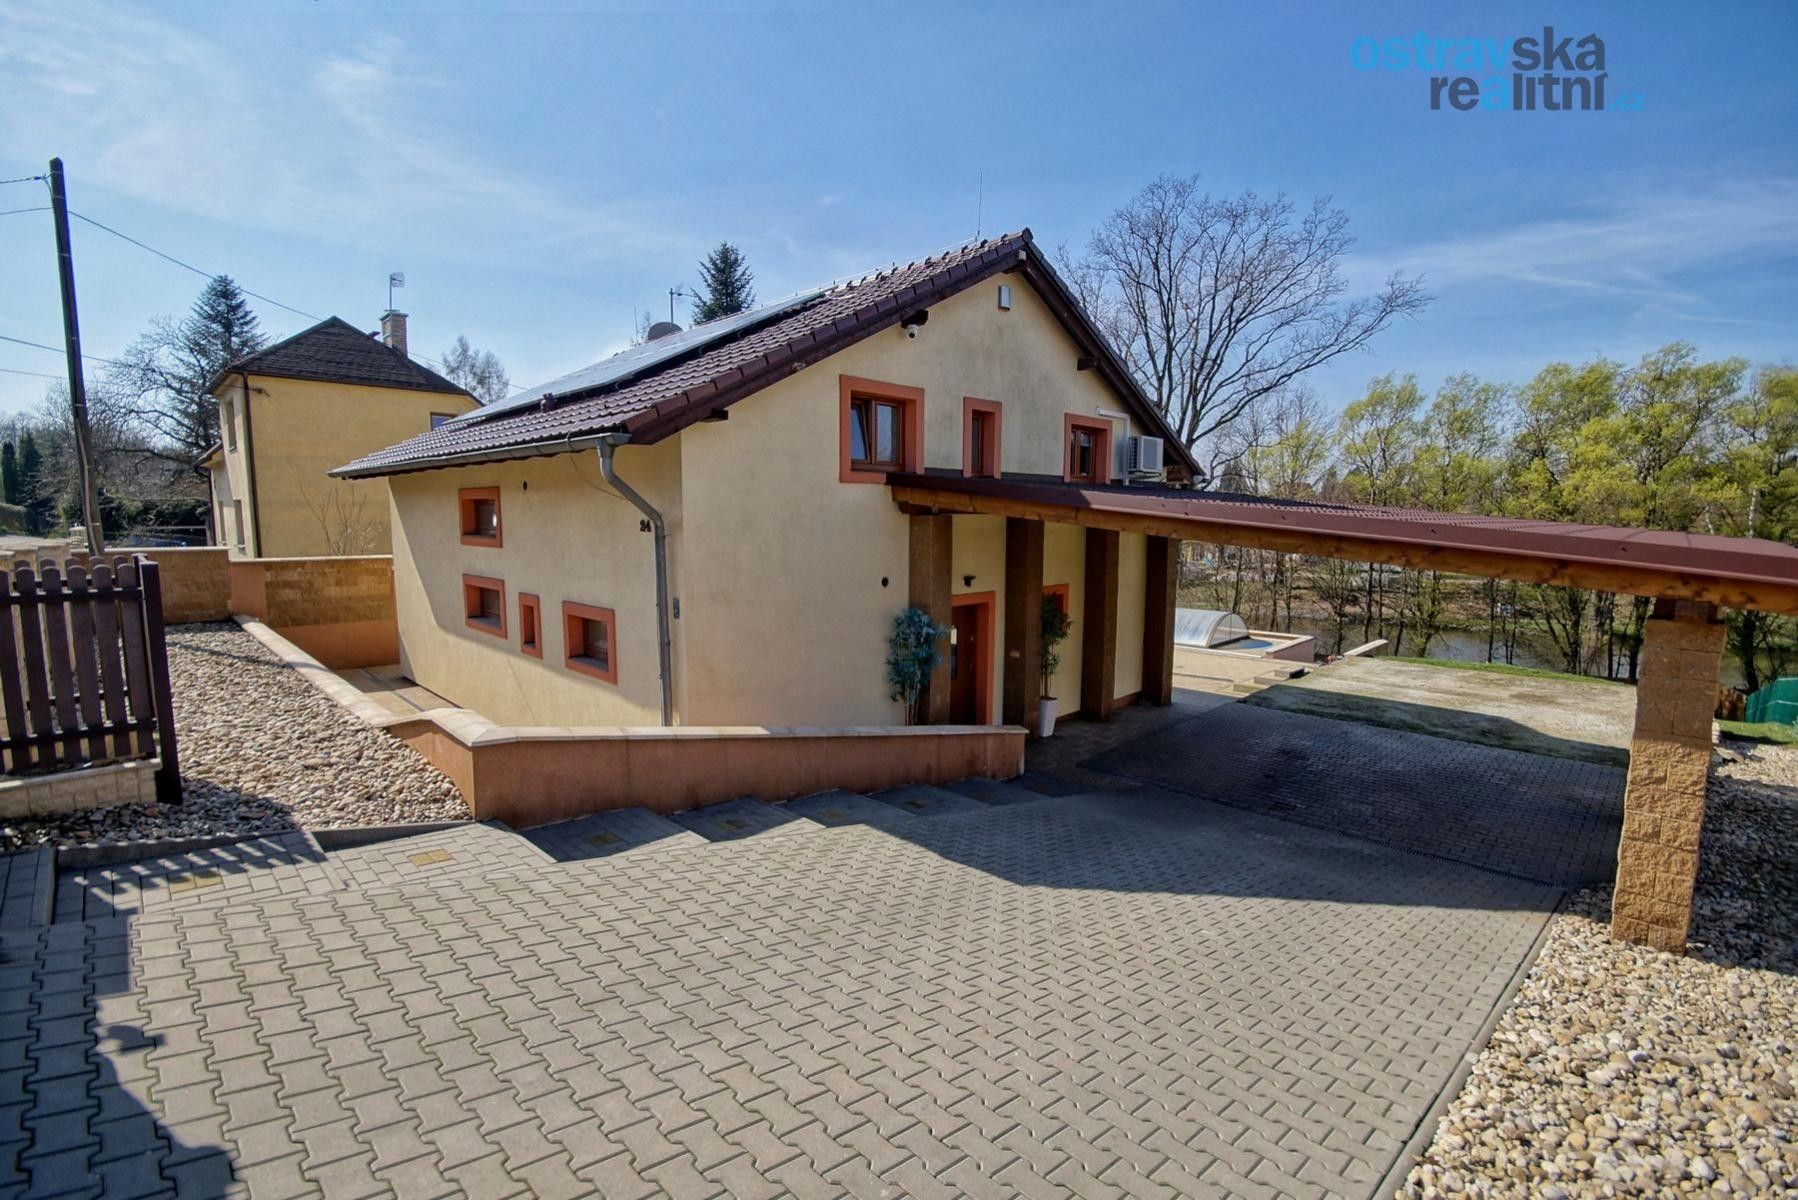 Rodinné domy, Výzkumná, Ostrava, 135 m²